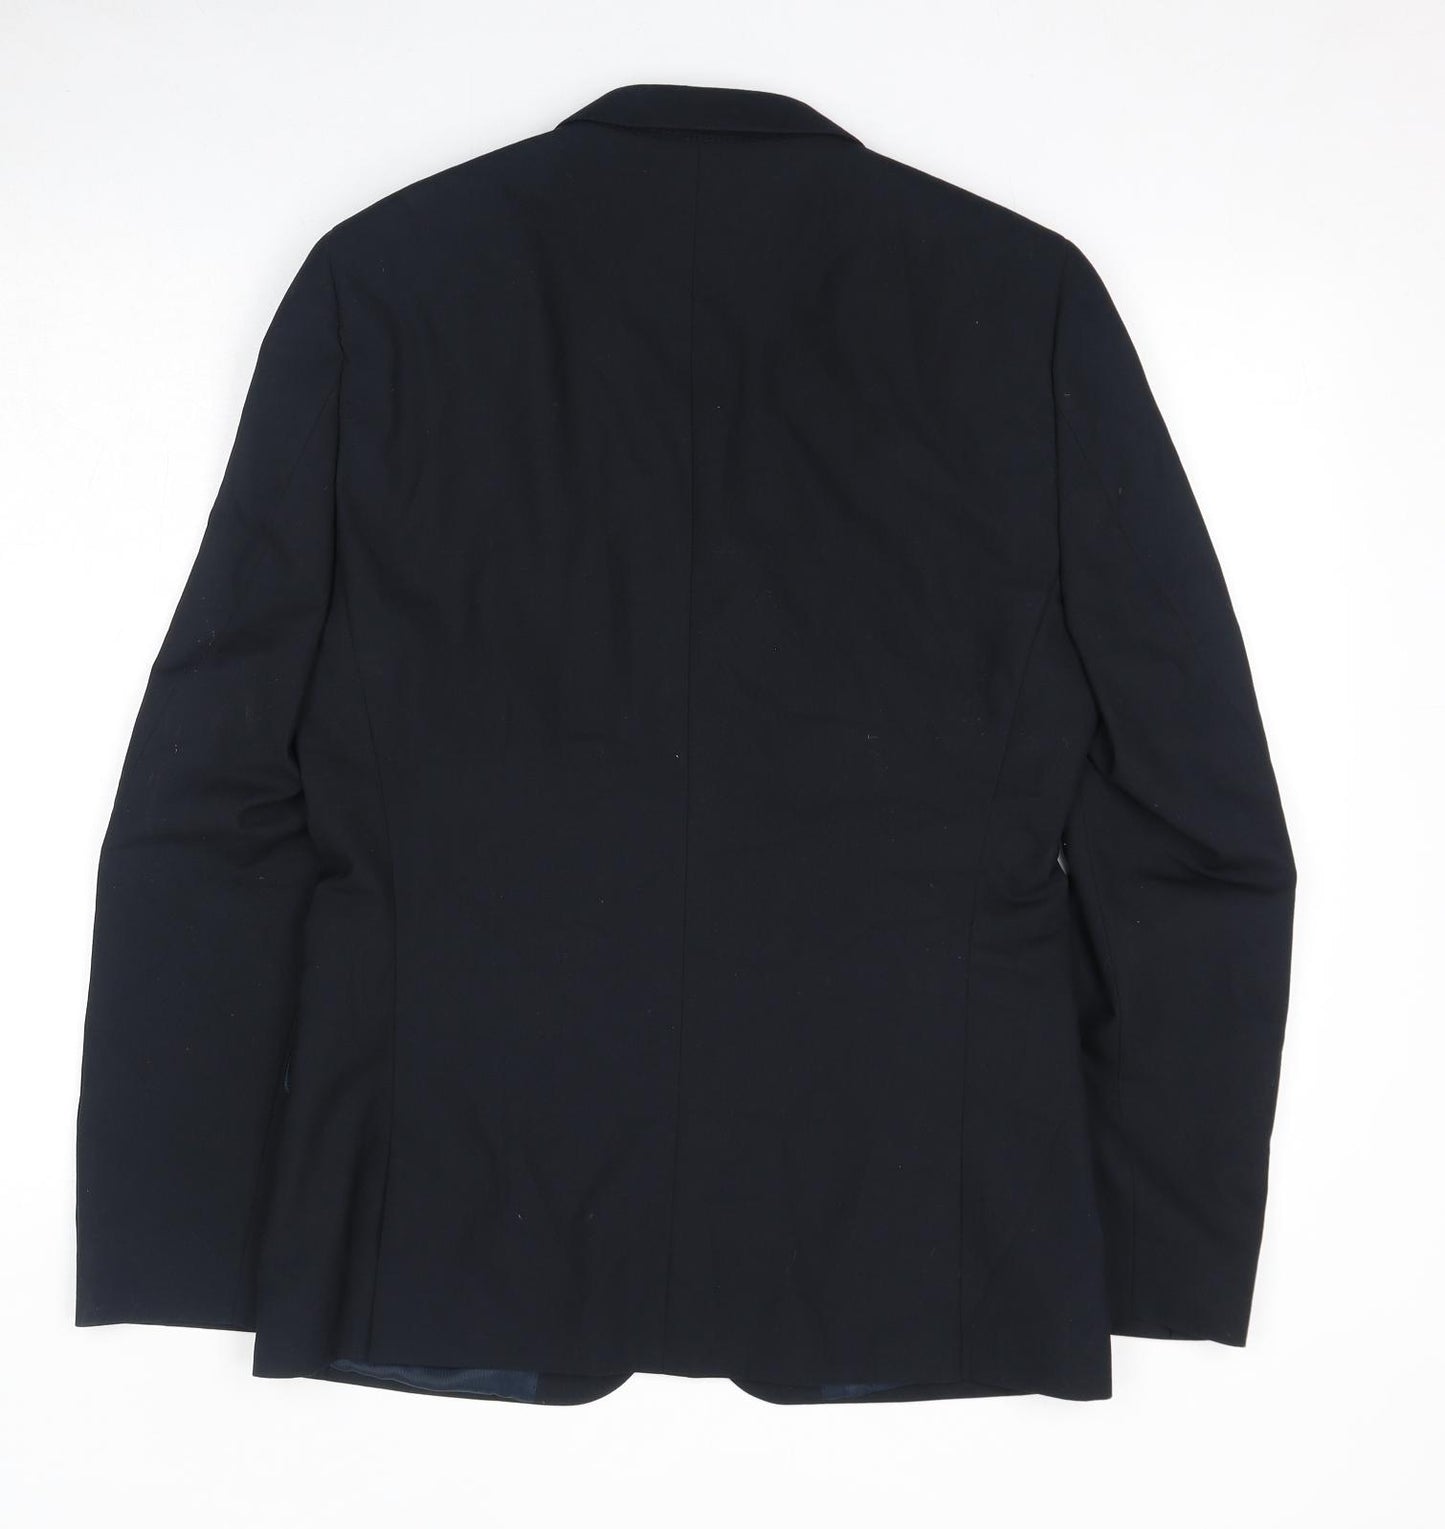 ASOS Mens Black Polyester Jacket Suit Jacket Size 38 Regular